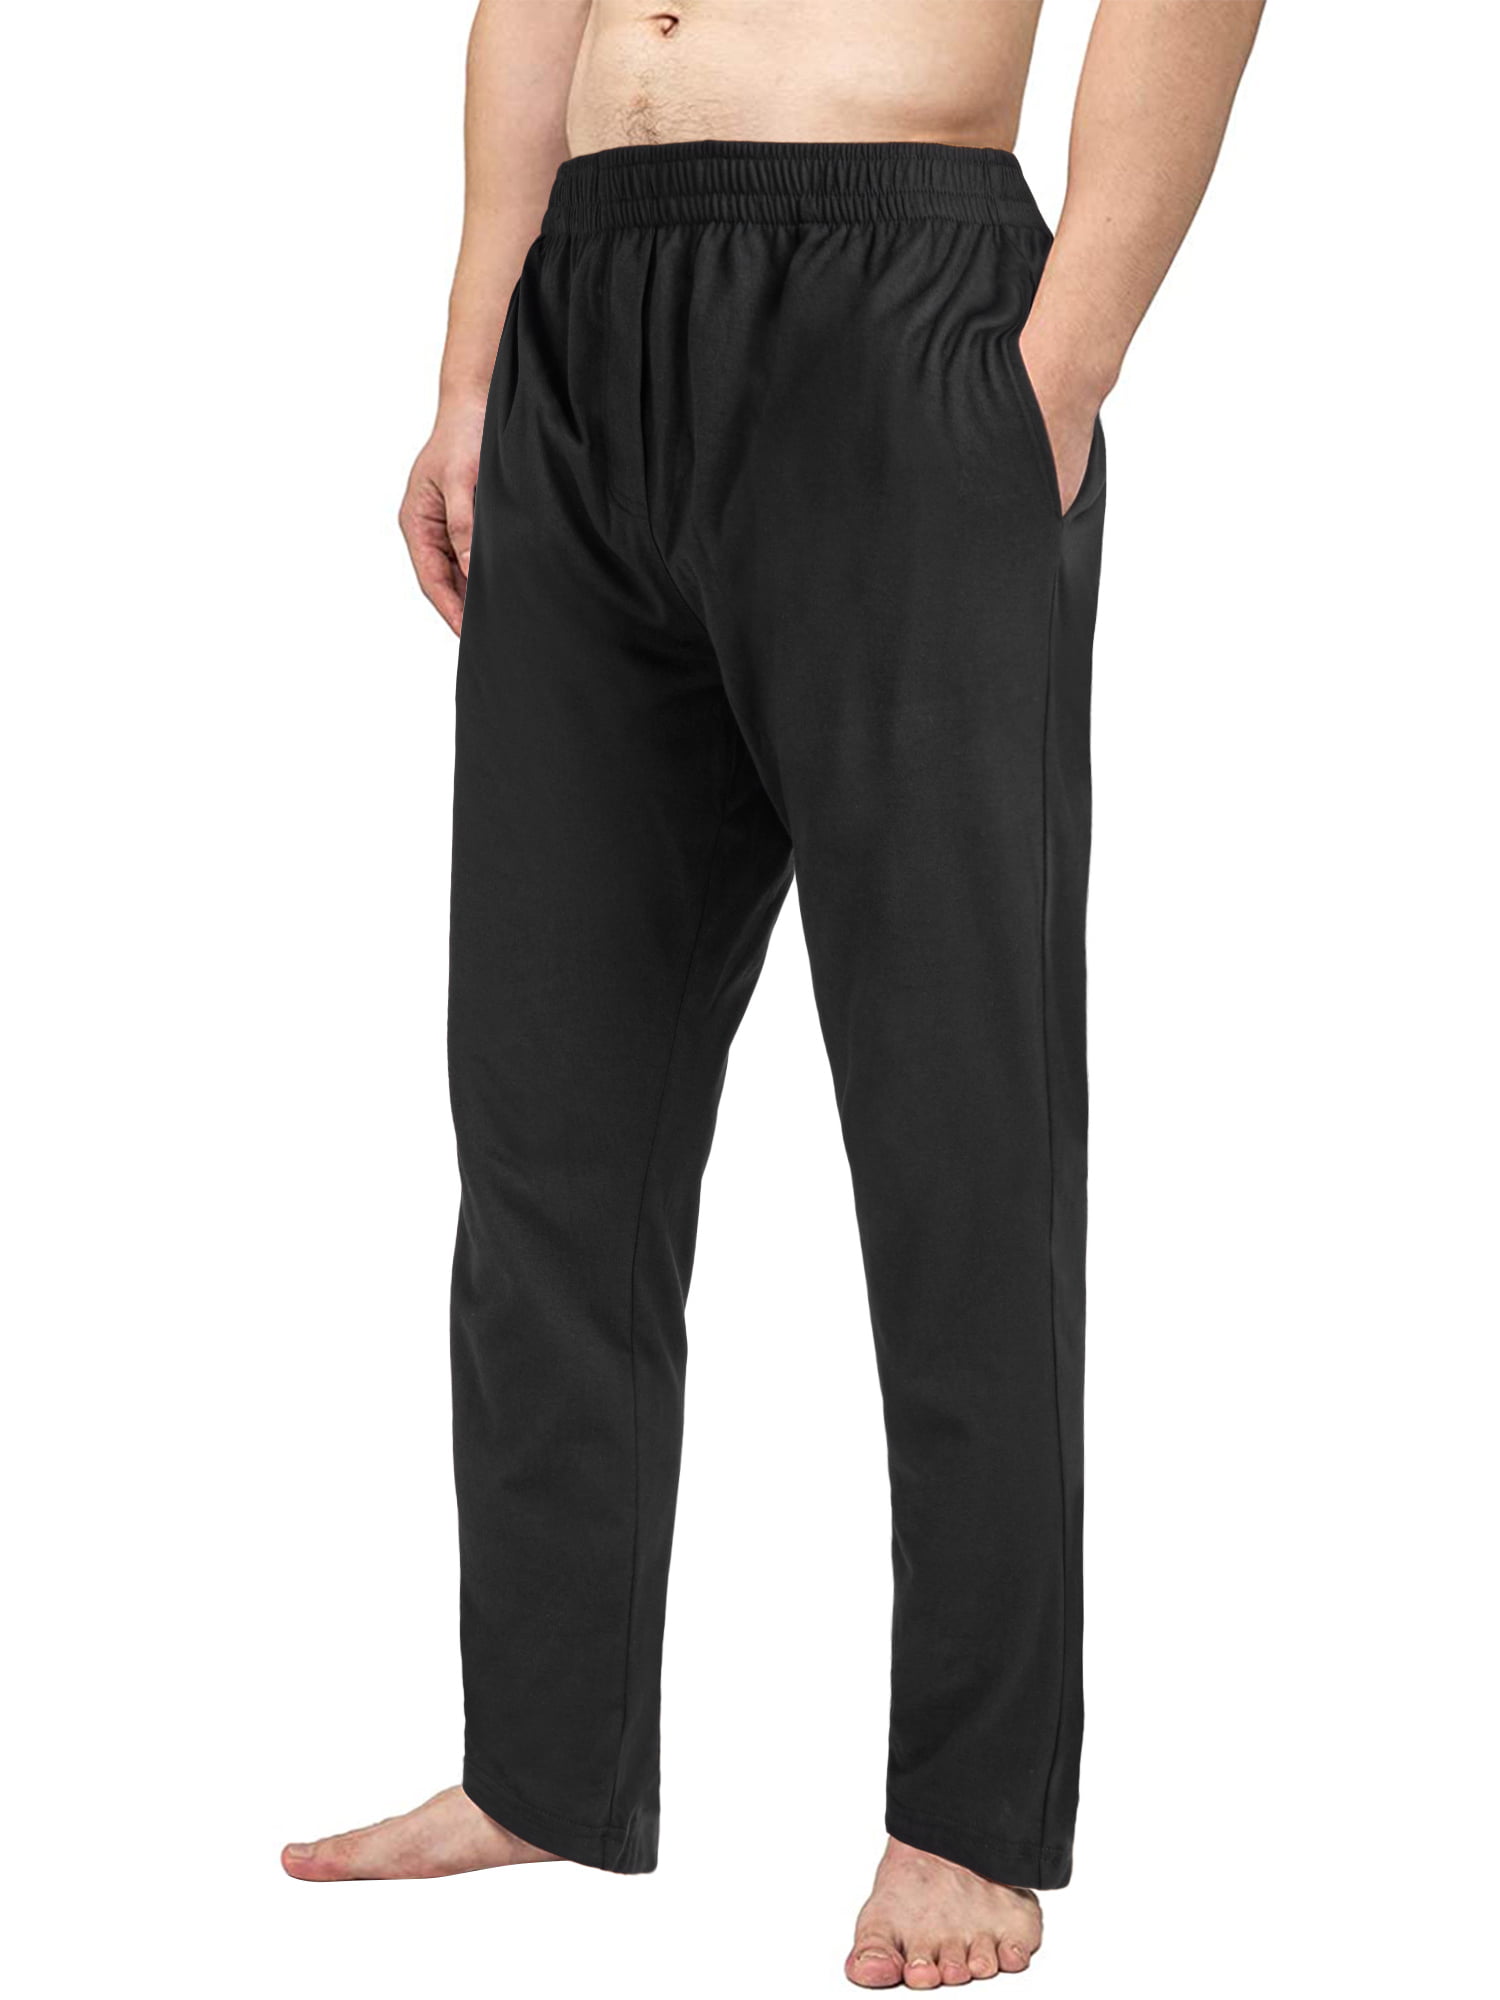 SAYFUT Men's Silk Satin Pajama Pants,Long Pajamas Pyjamas Bottoms  Comfortable Sleepwear with Drawstring Sleep Pants